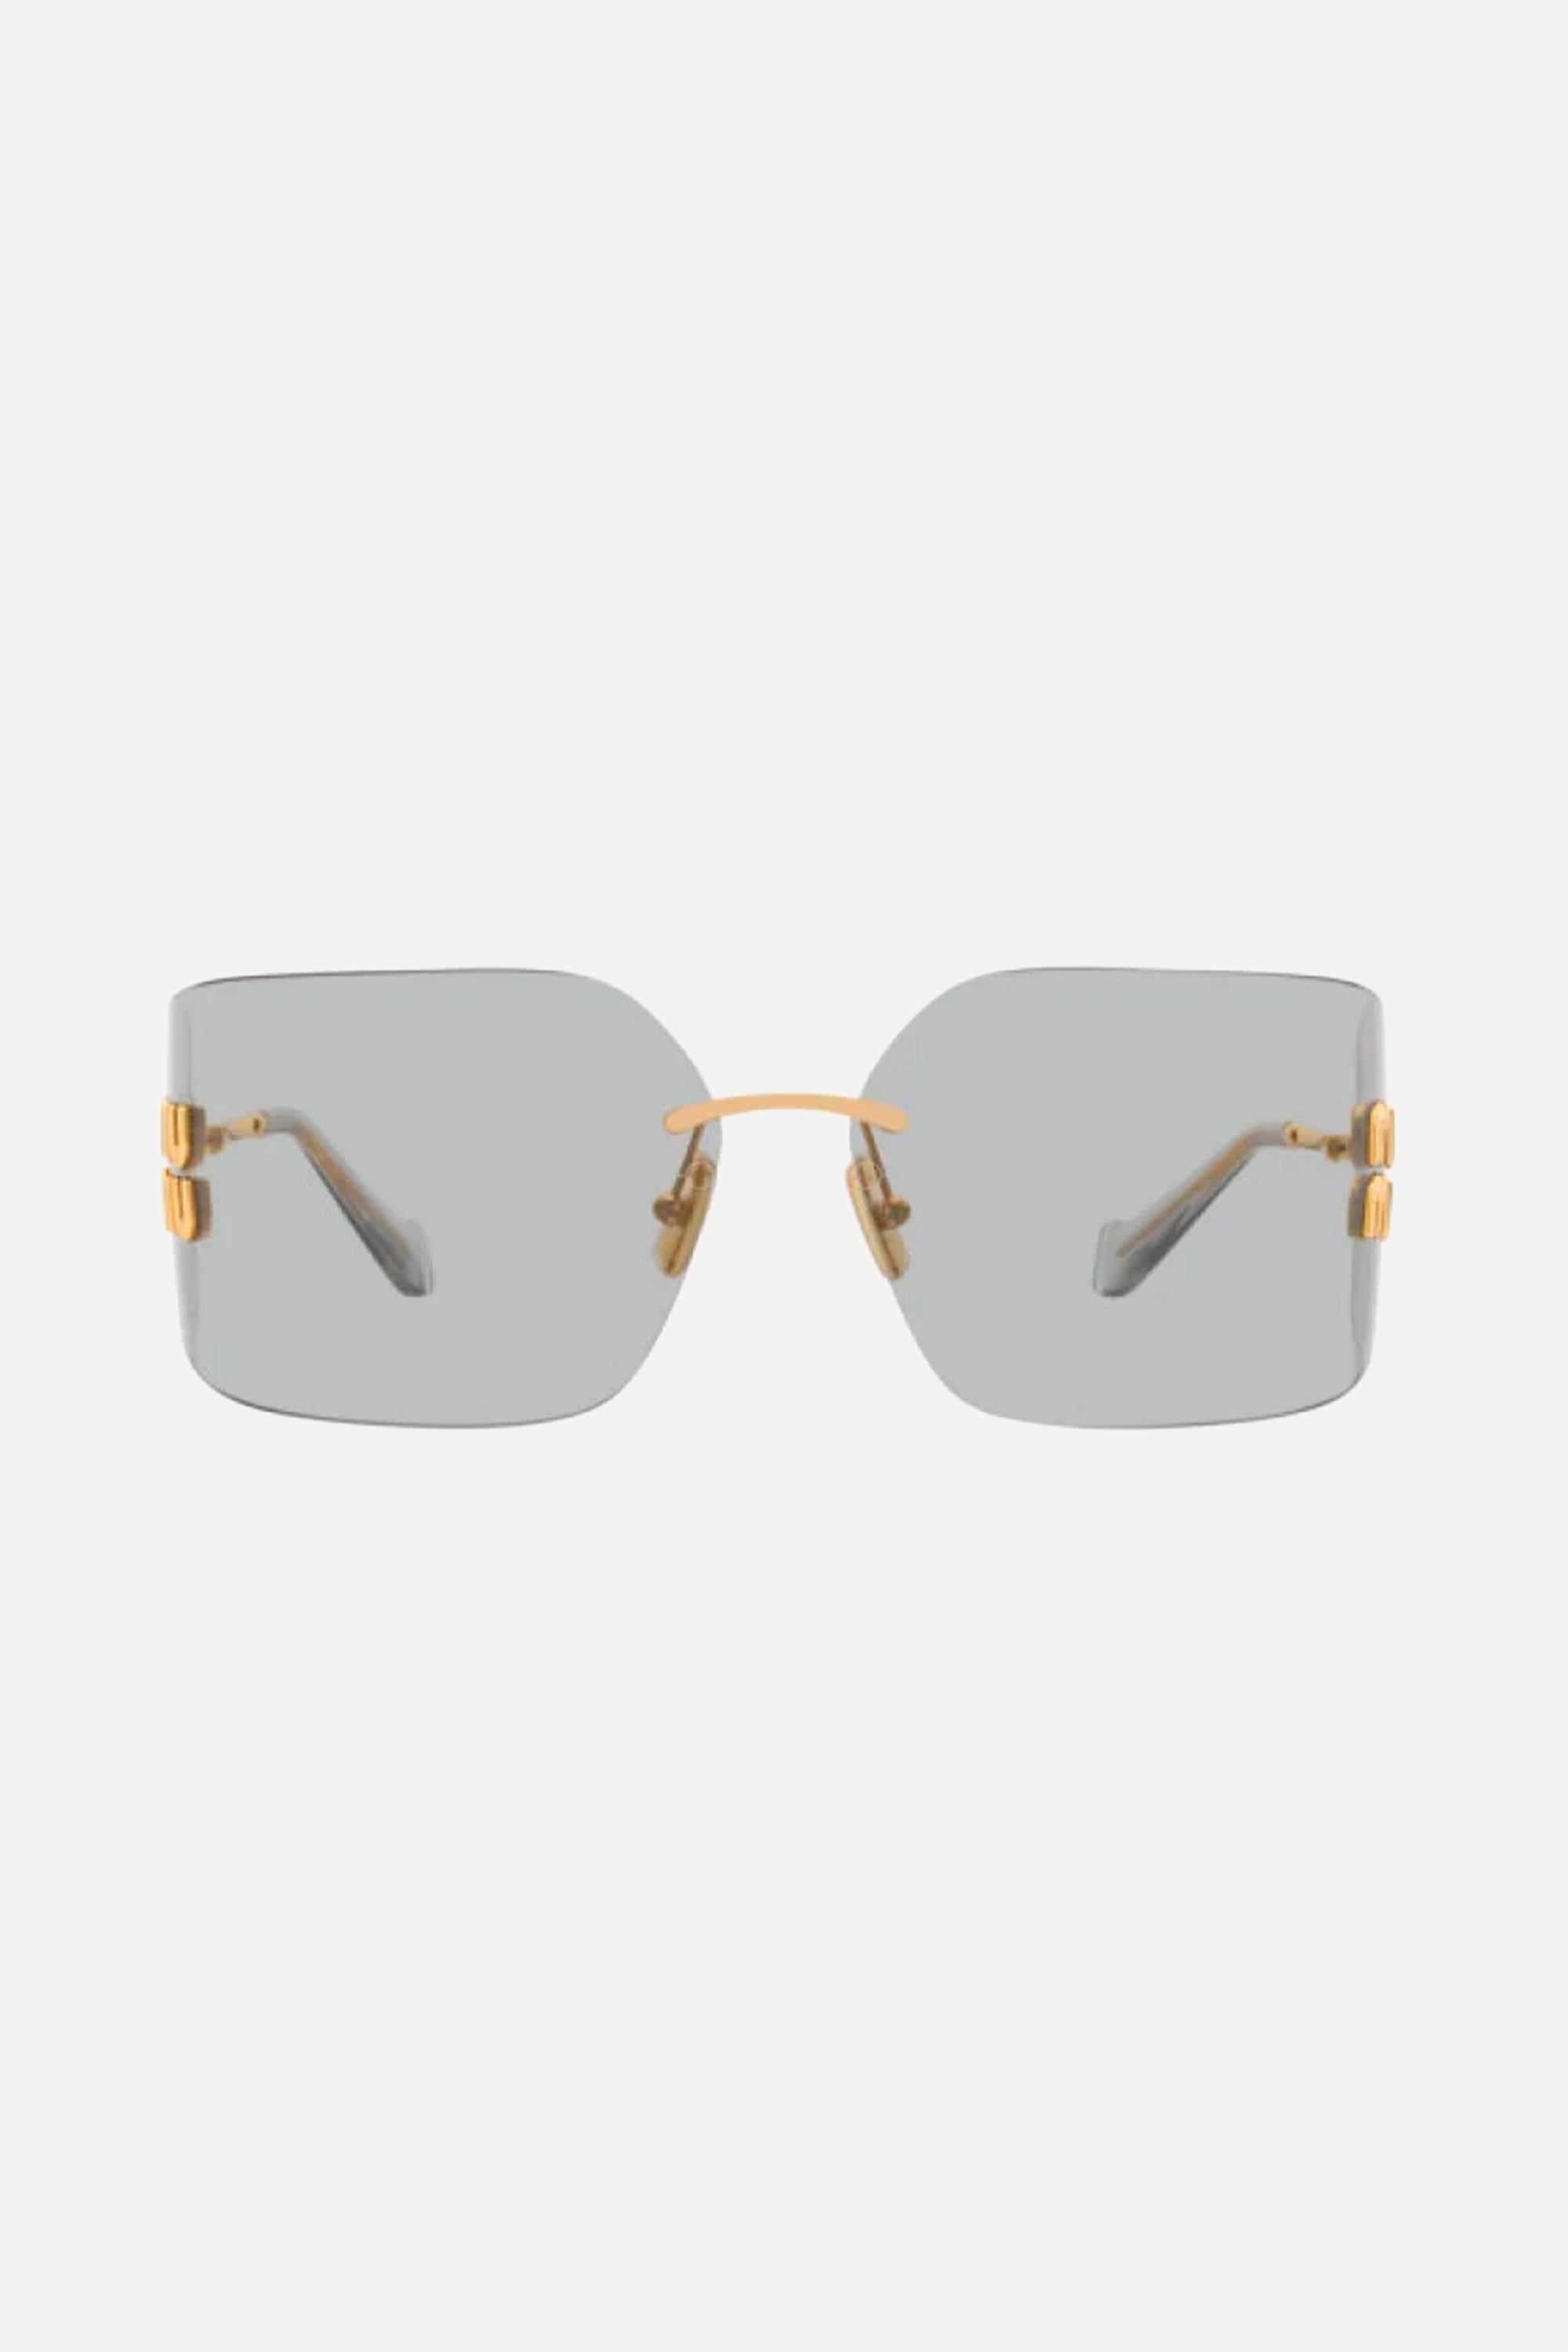 Miu Miu squared metal sunglasses with blue mirror and gold details - Eyewear Club